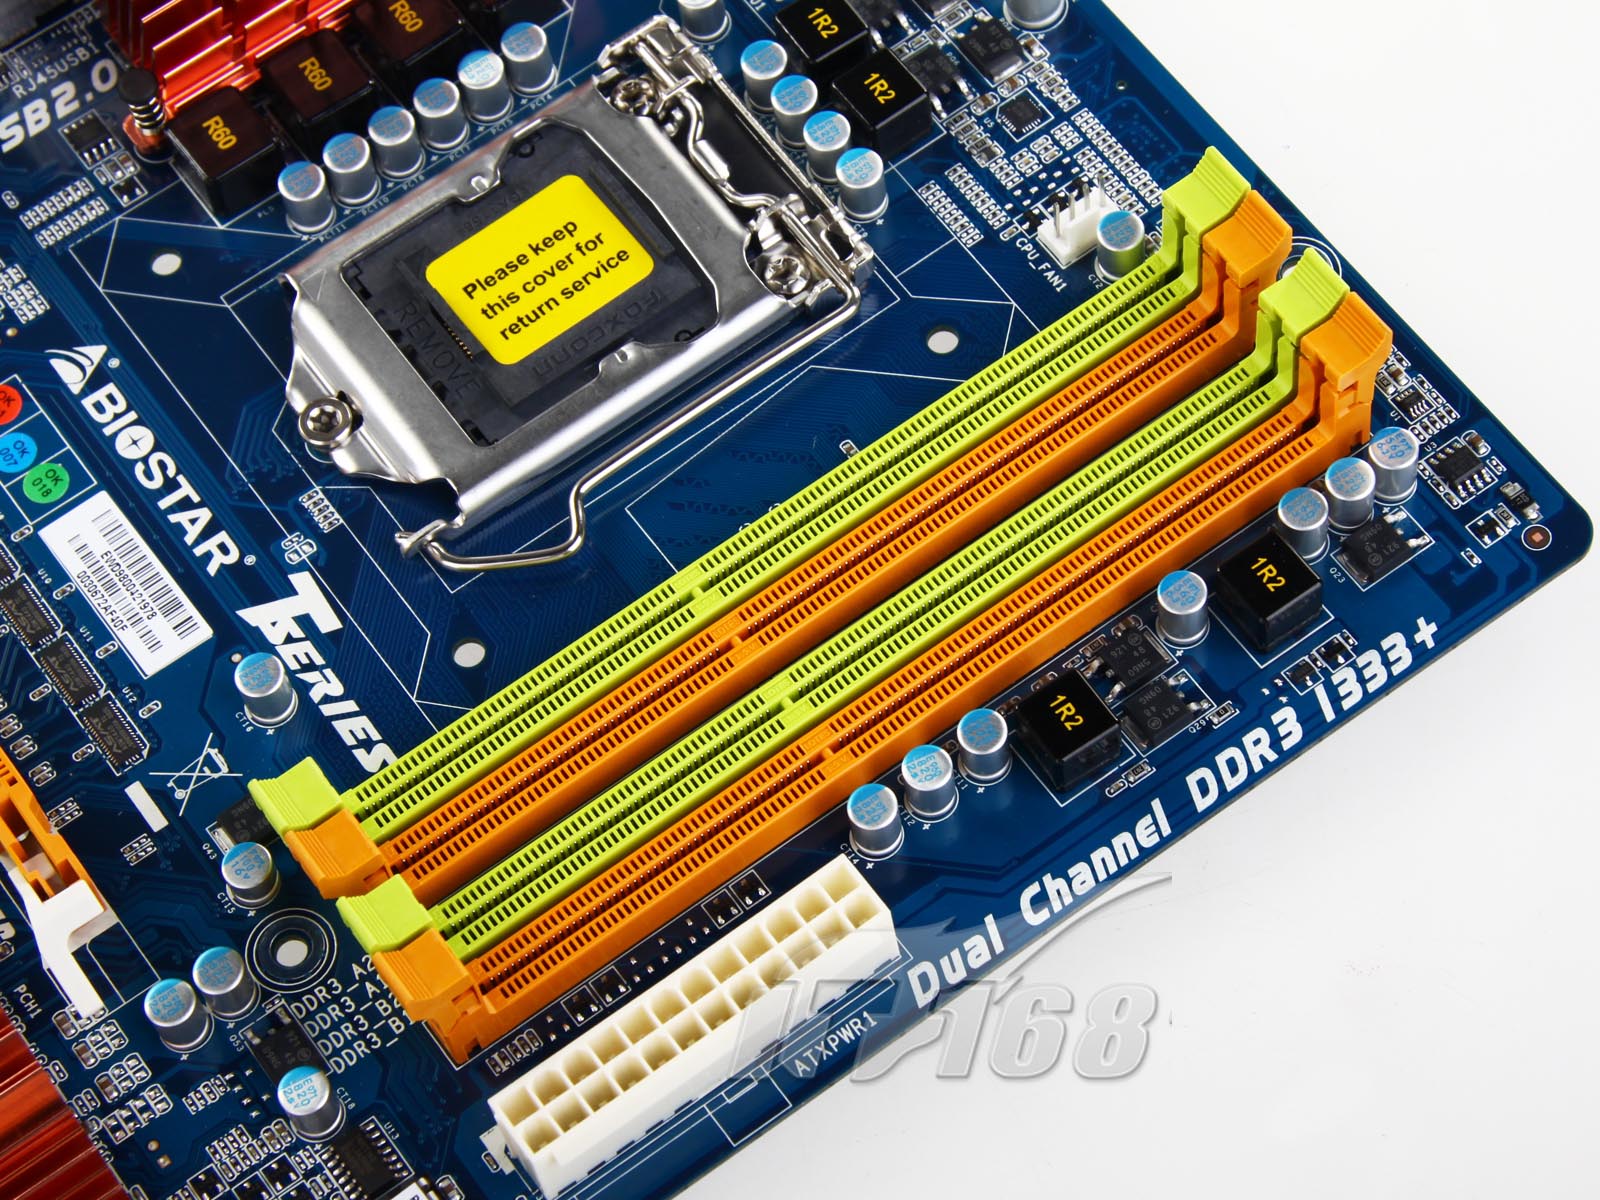 H510 主板与 DDR3 内存能否搭配使用？深入探讨这一备受关注的争议话题  第4张